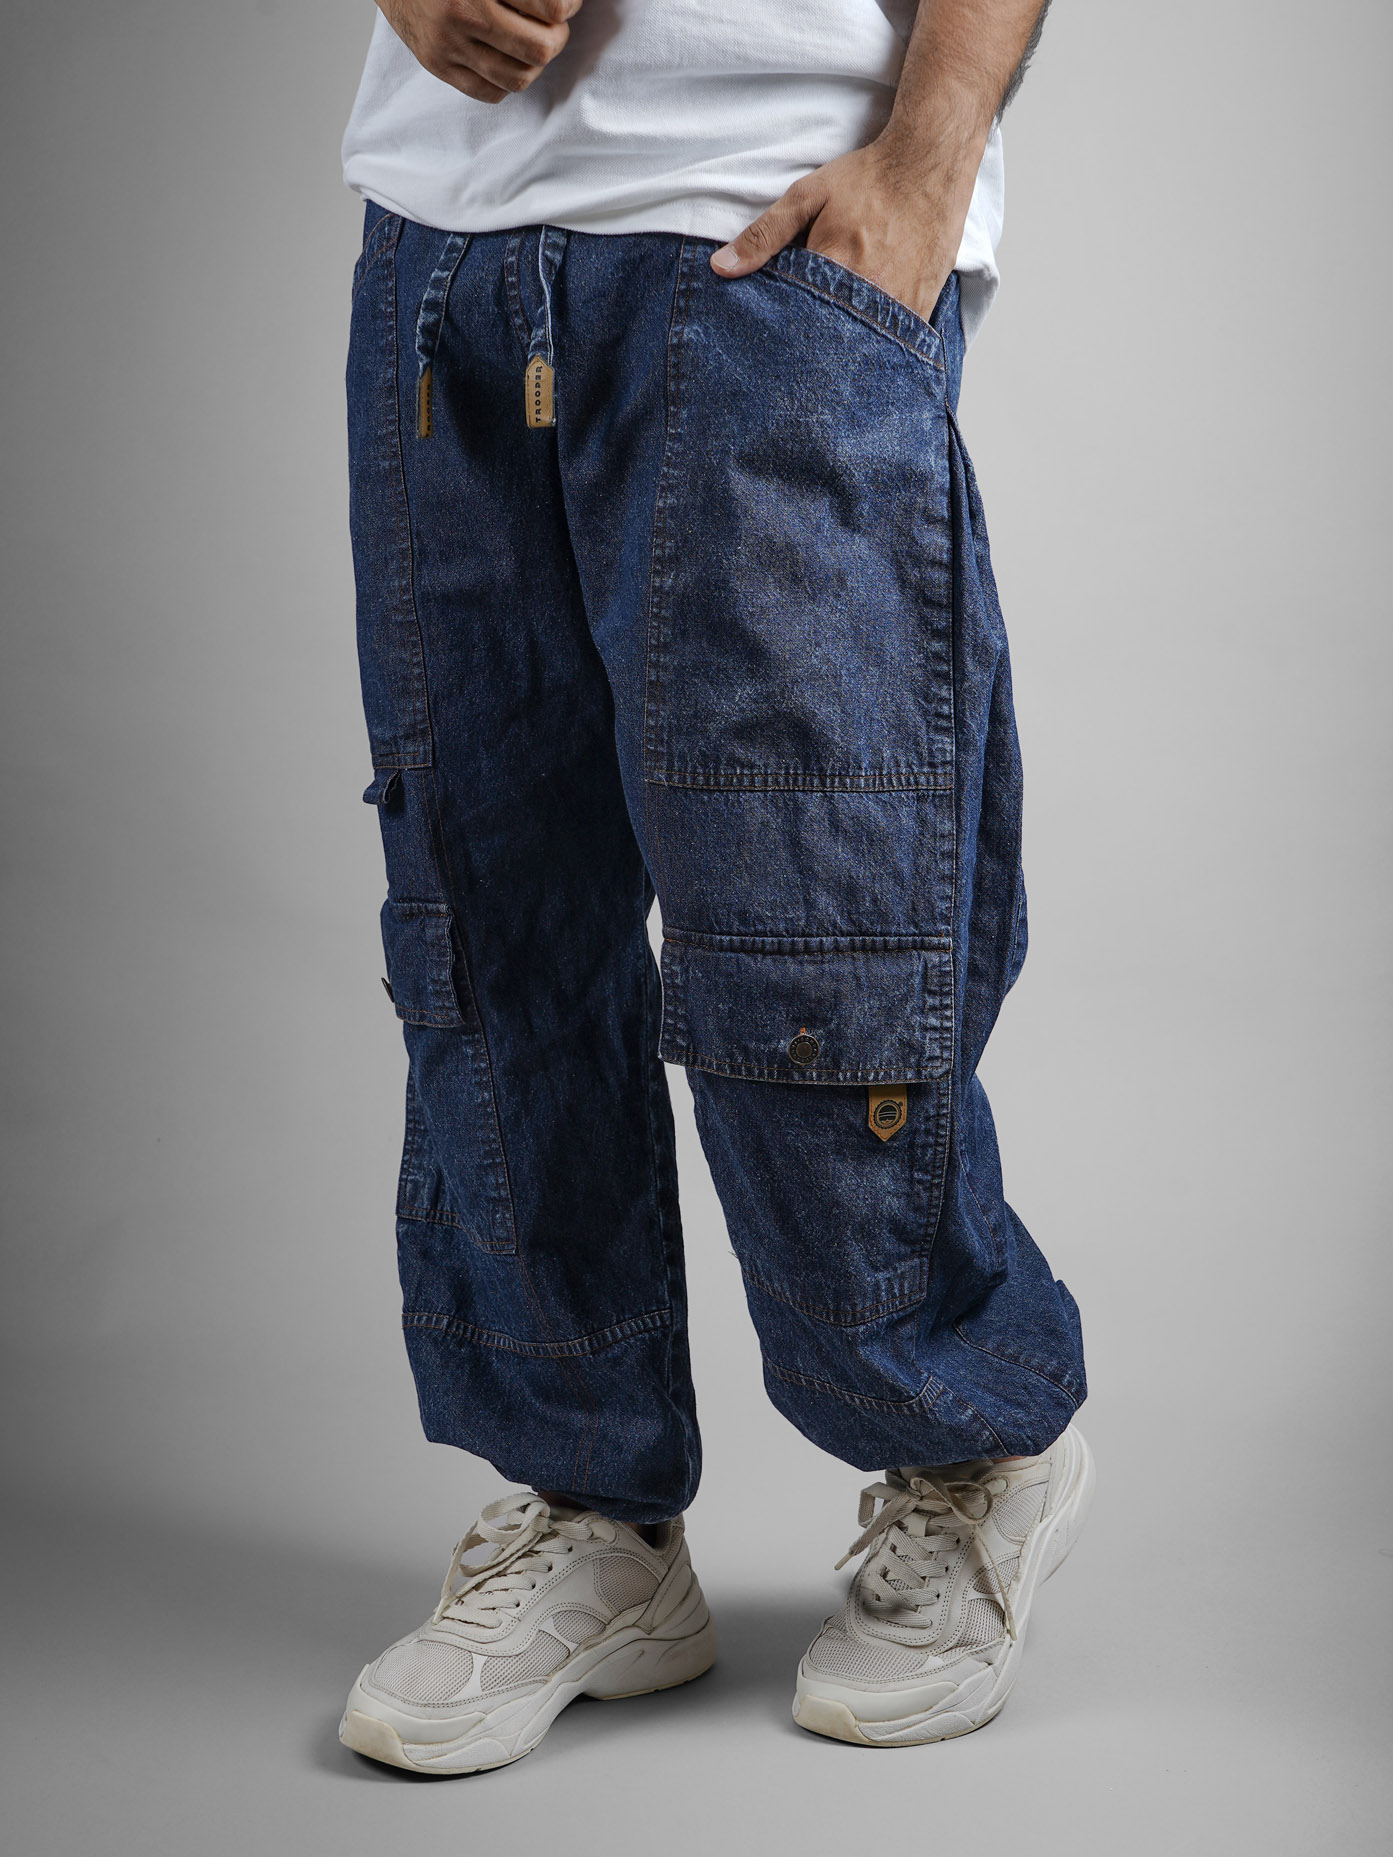 Men's Tropic-Weight Cargo Pants, Classic Fit, Straight Leg | Pants at  L.L.Bean